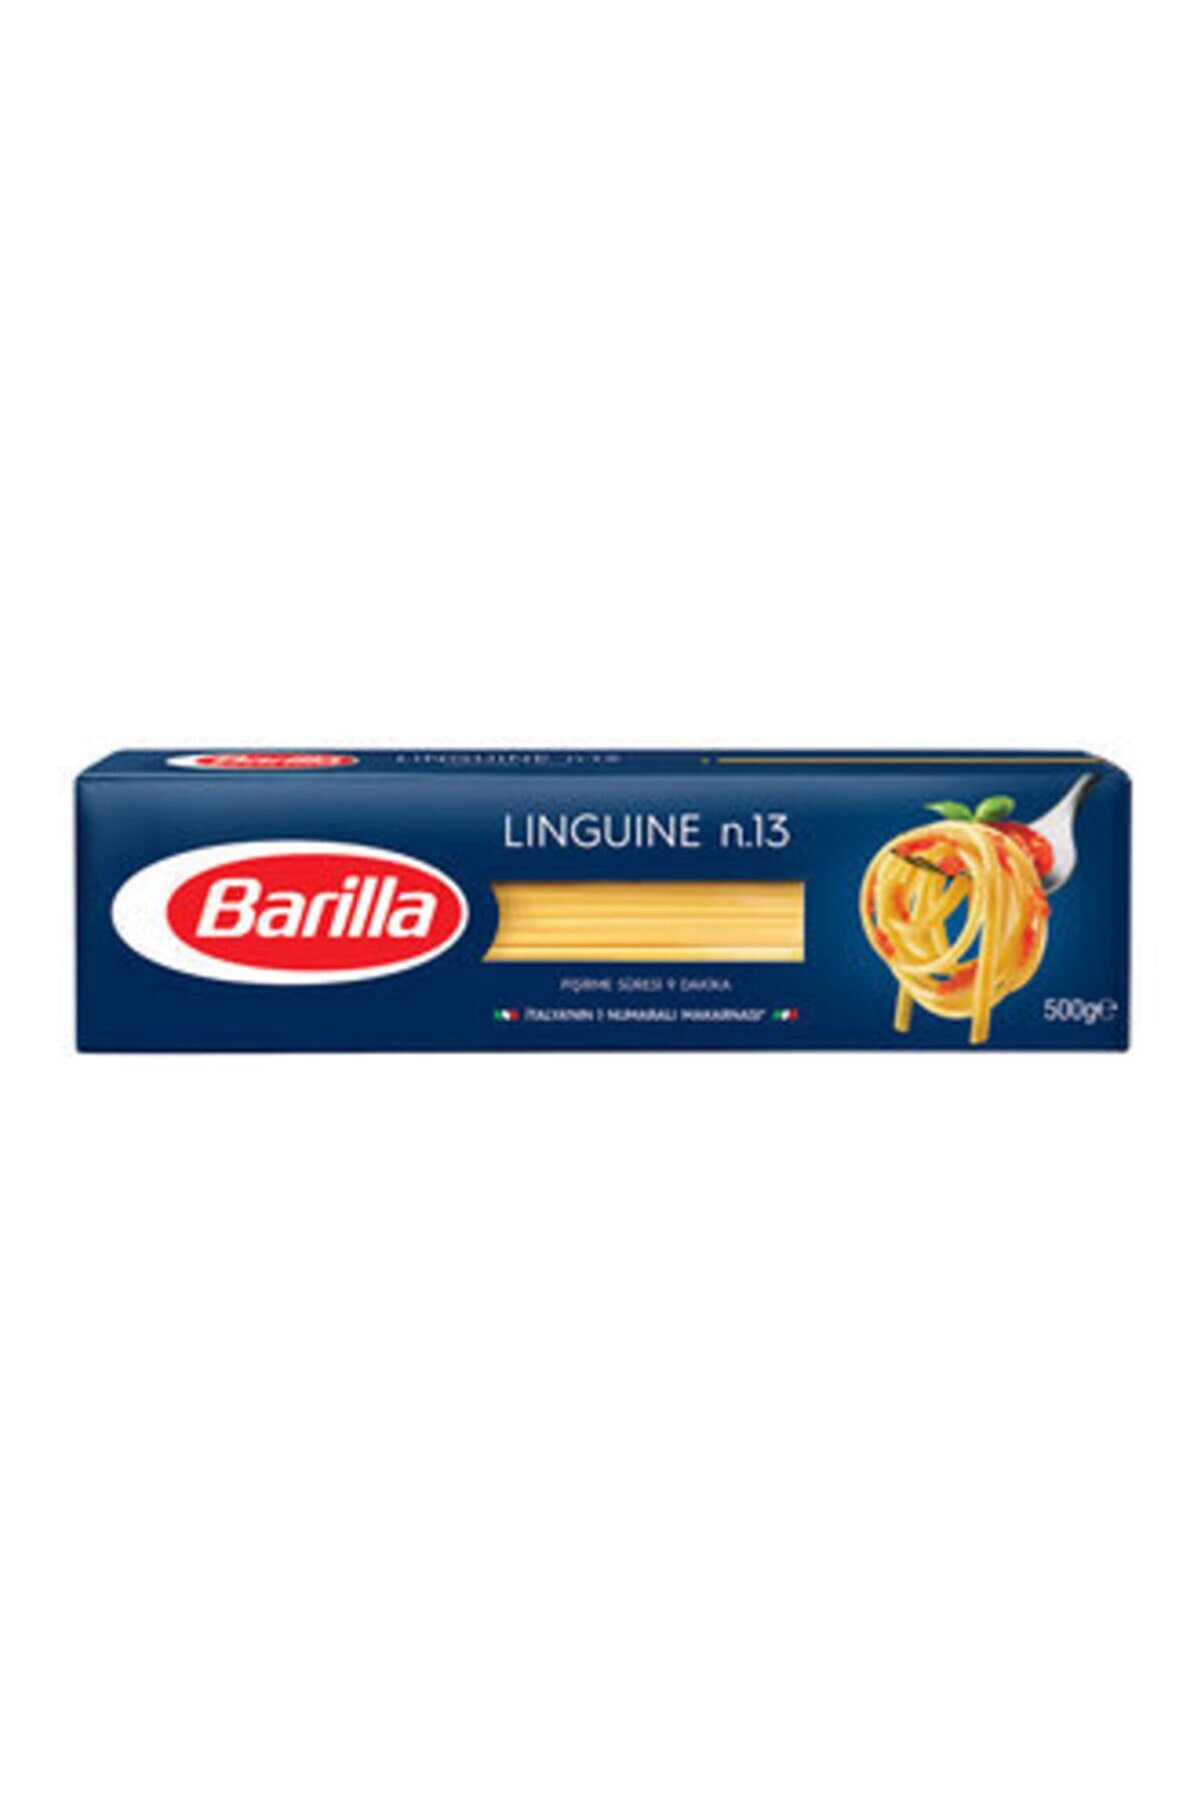 Barilla Linguine (Yassı) Spagetti Makarna No.13 500 G